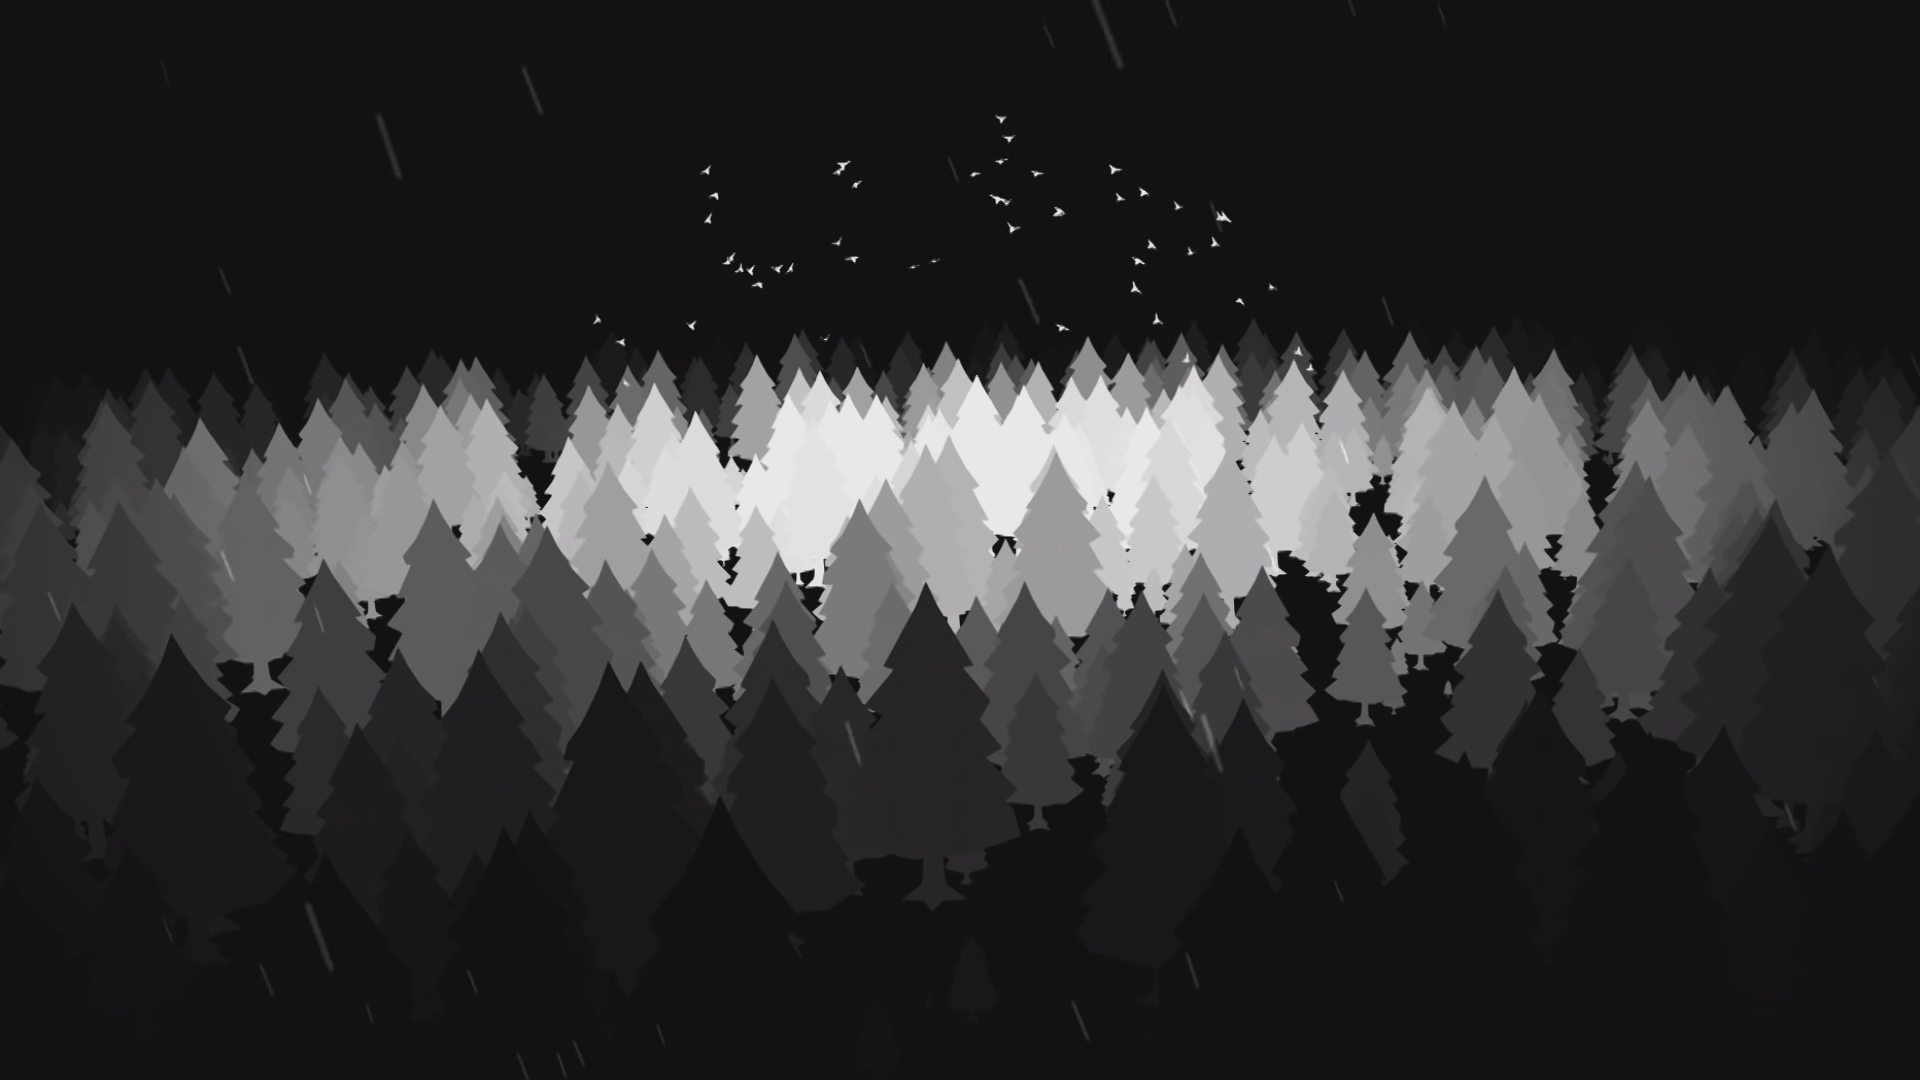 Black and white forest x rwallpaper